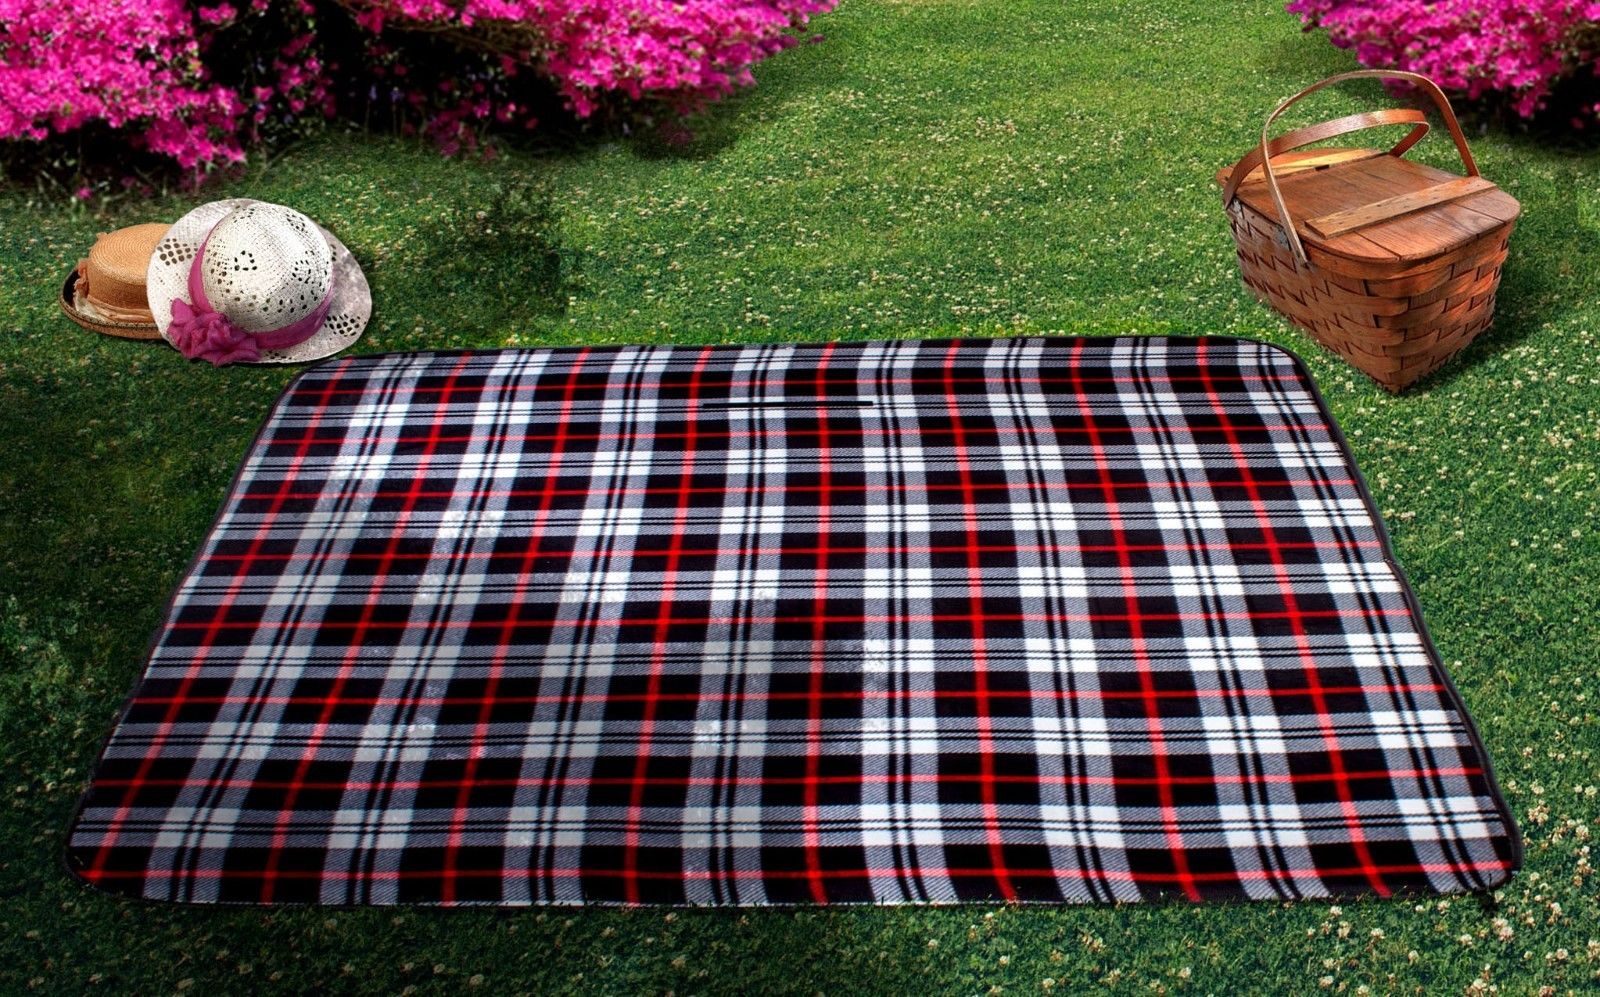 Waterproof Picnic Blanket – 50" x 60" Large Beach Blanket Or Outdoor Picnic Mat